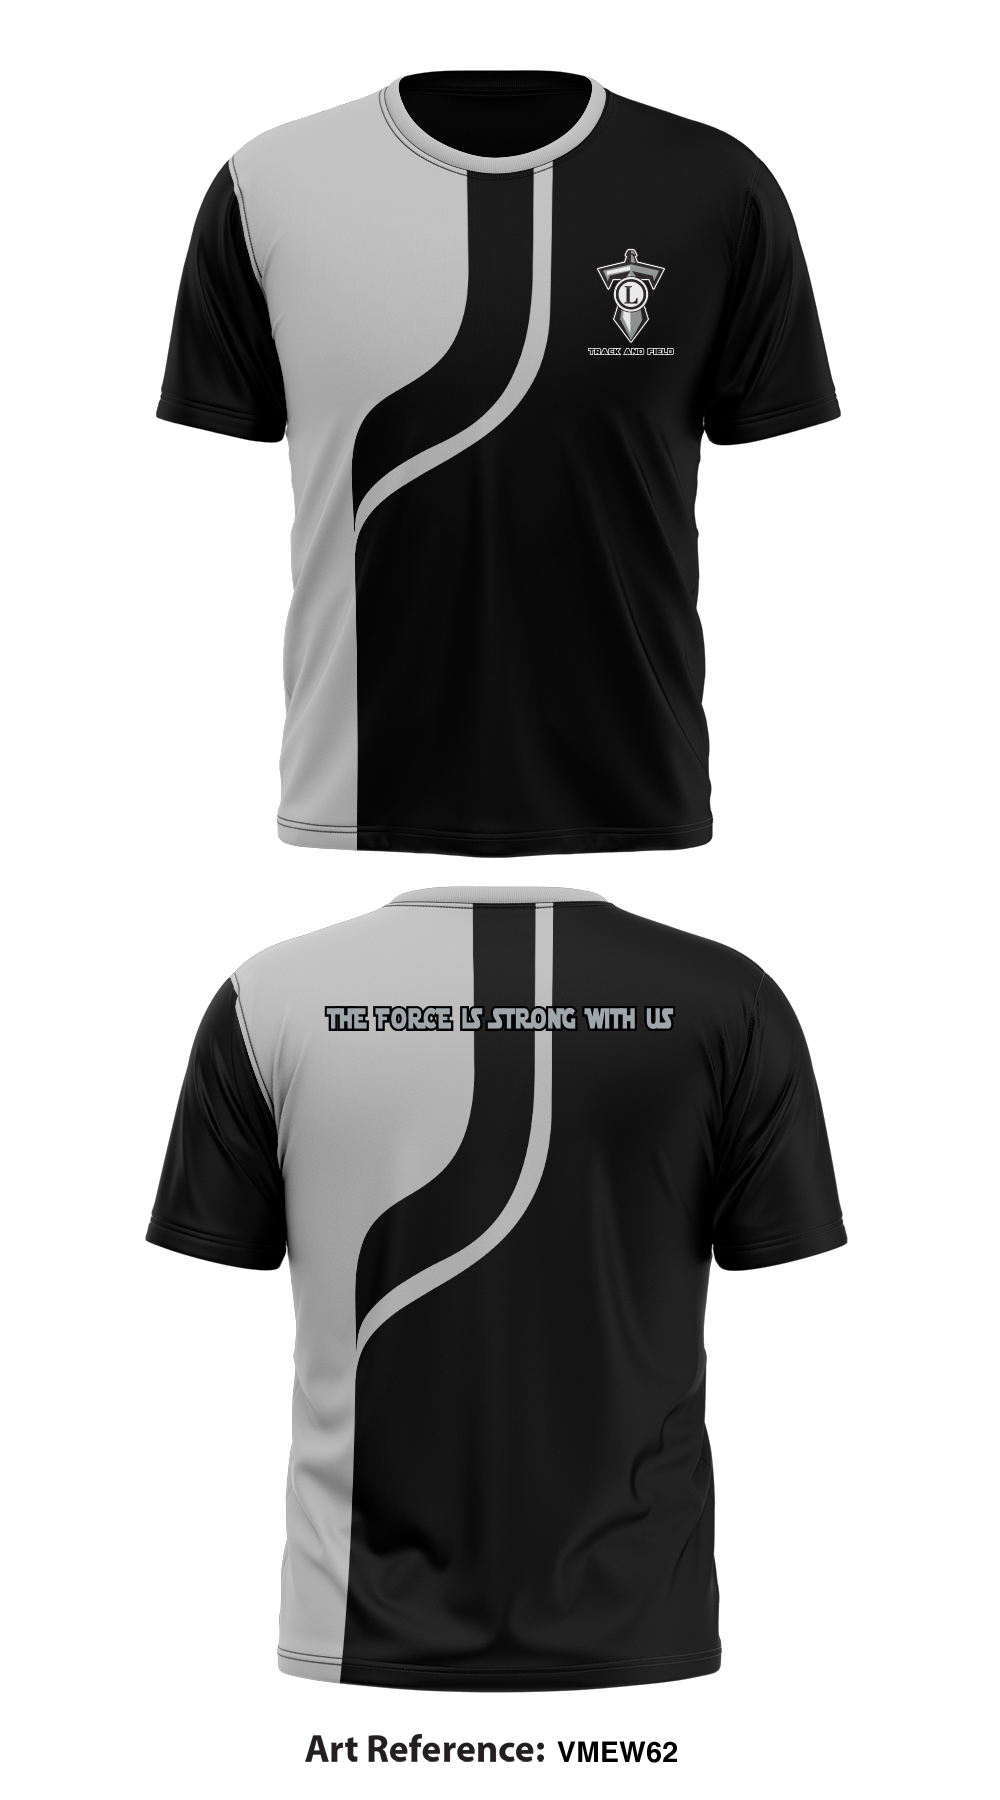 Lakeshore track & field 30890336 Short Sleeve Performance Shirt - 3